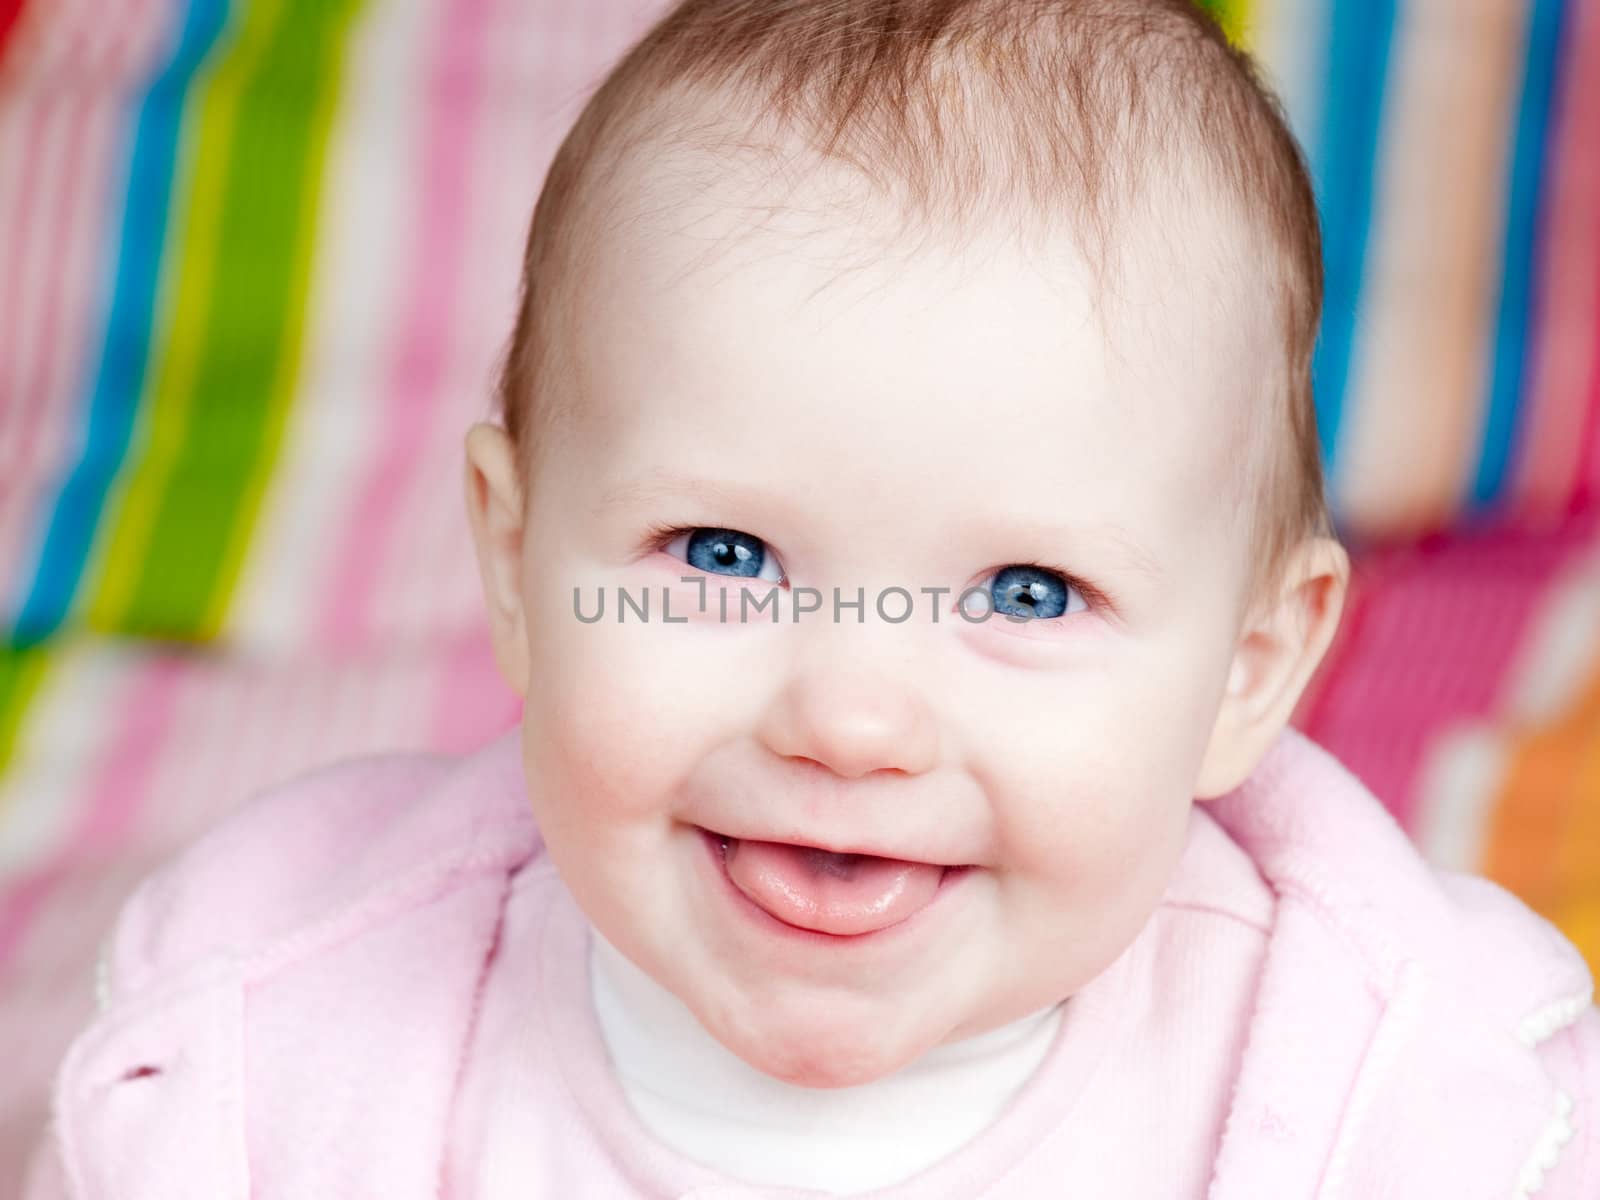 Cheerful infant by naumoid